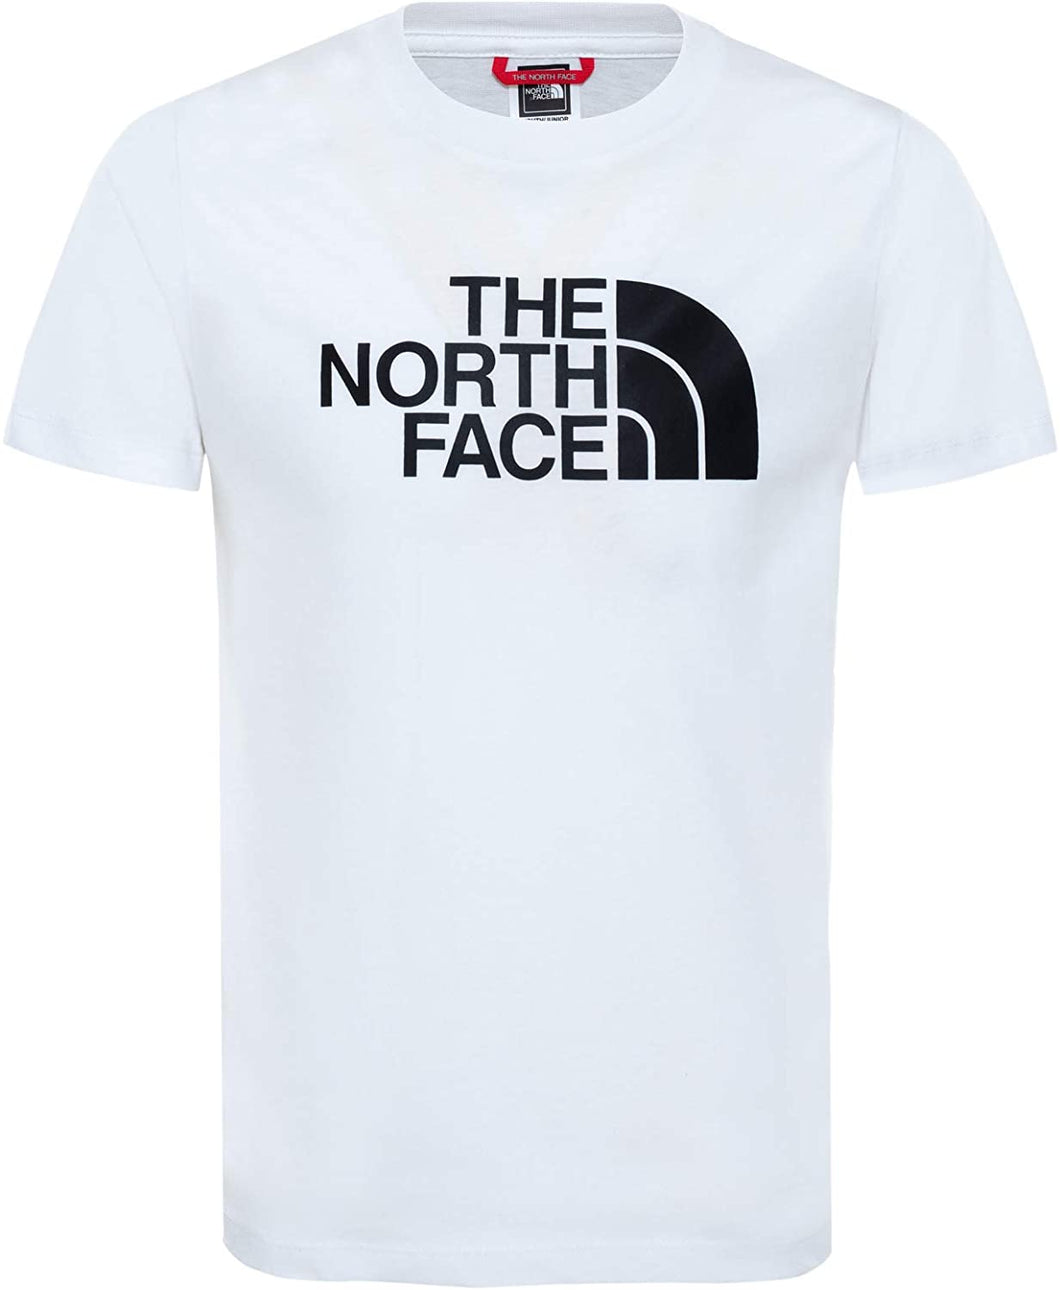 The North Face T-Shirt Junior Bambino Bianca